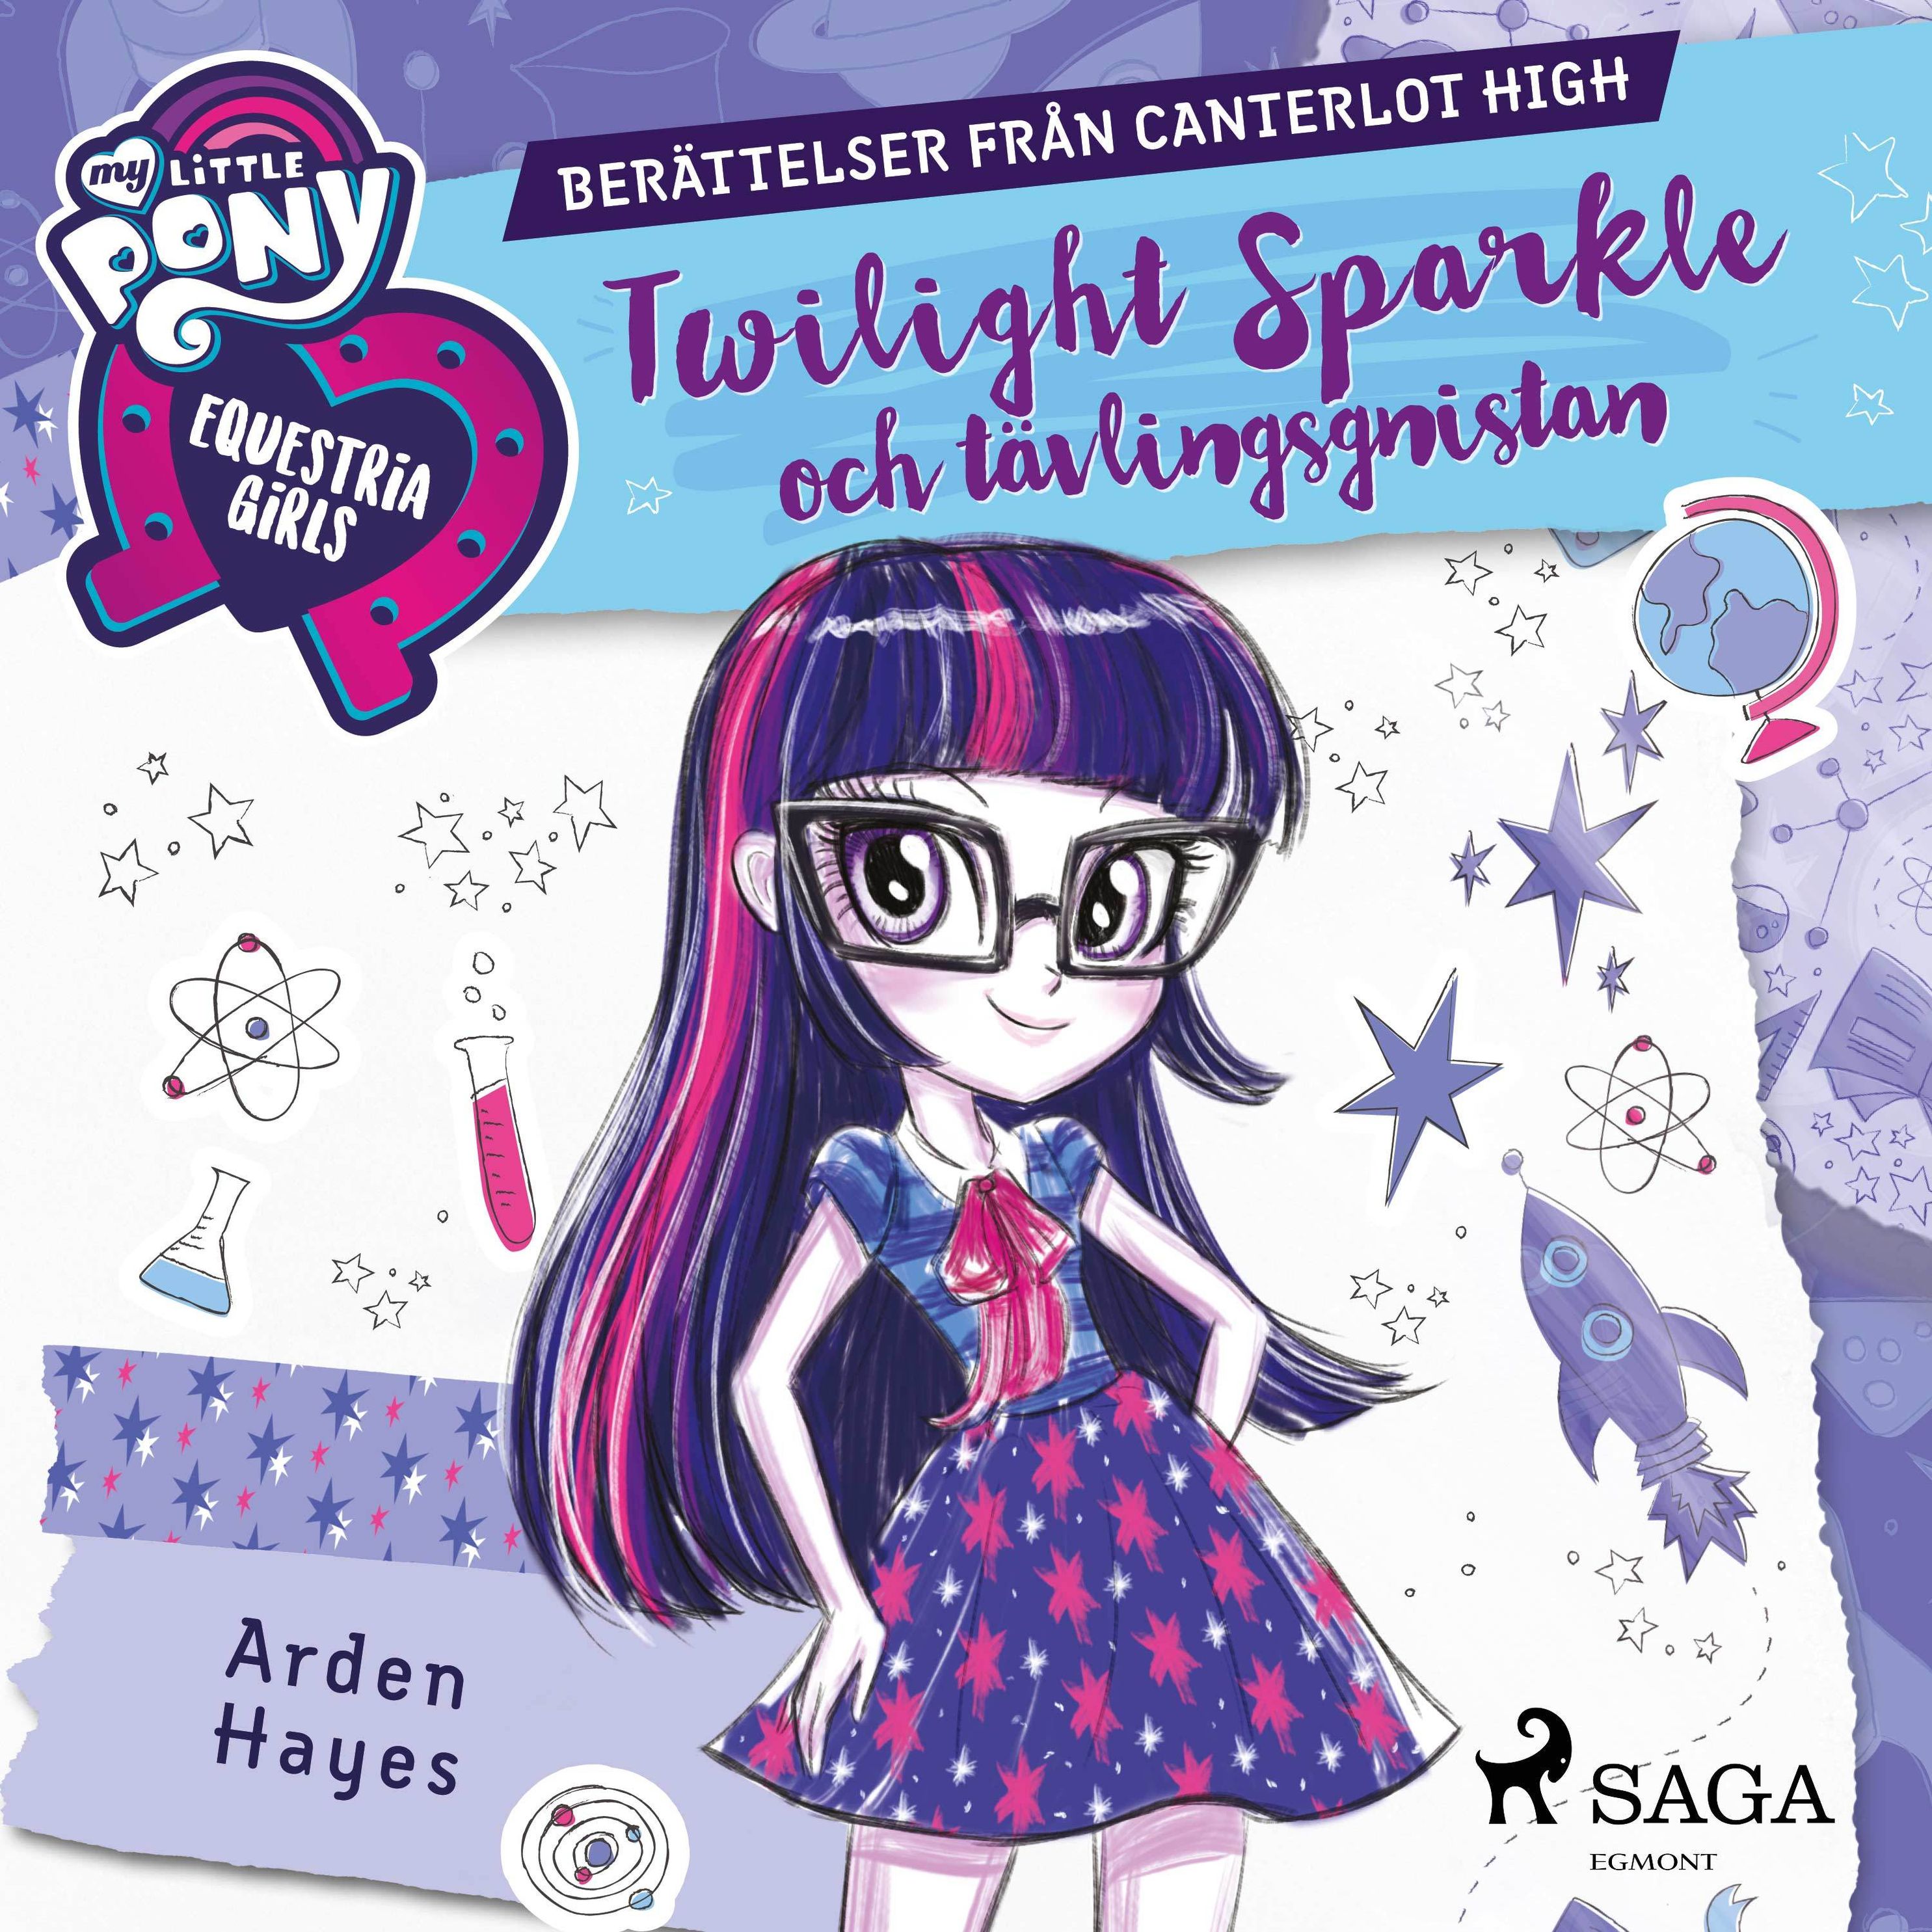 My Little Pony - Equestria Girls - Twilight Sparkle och tävlingsgnistan  Hörbuch Download